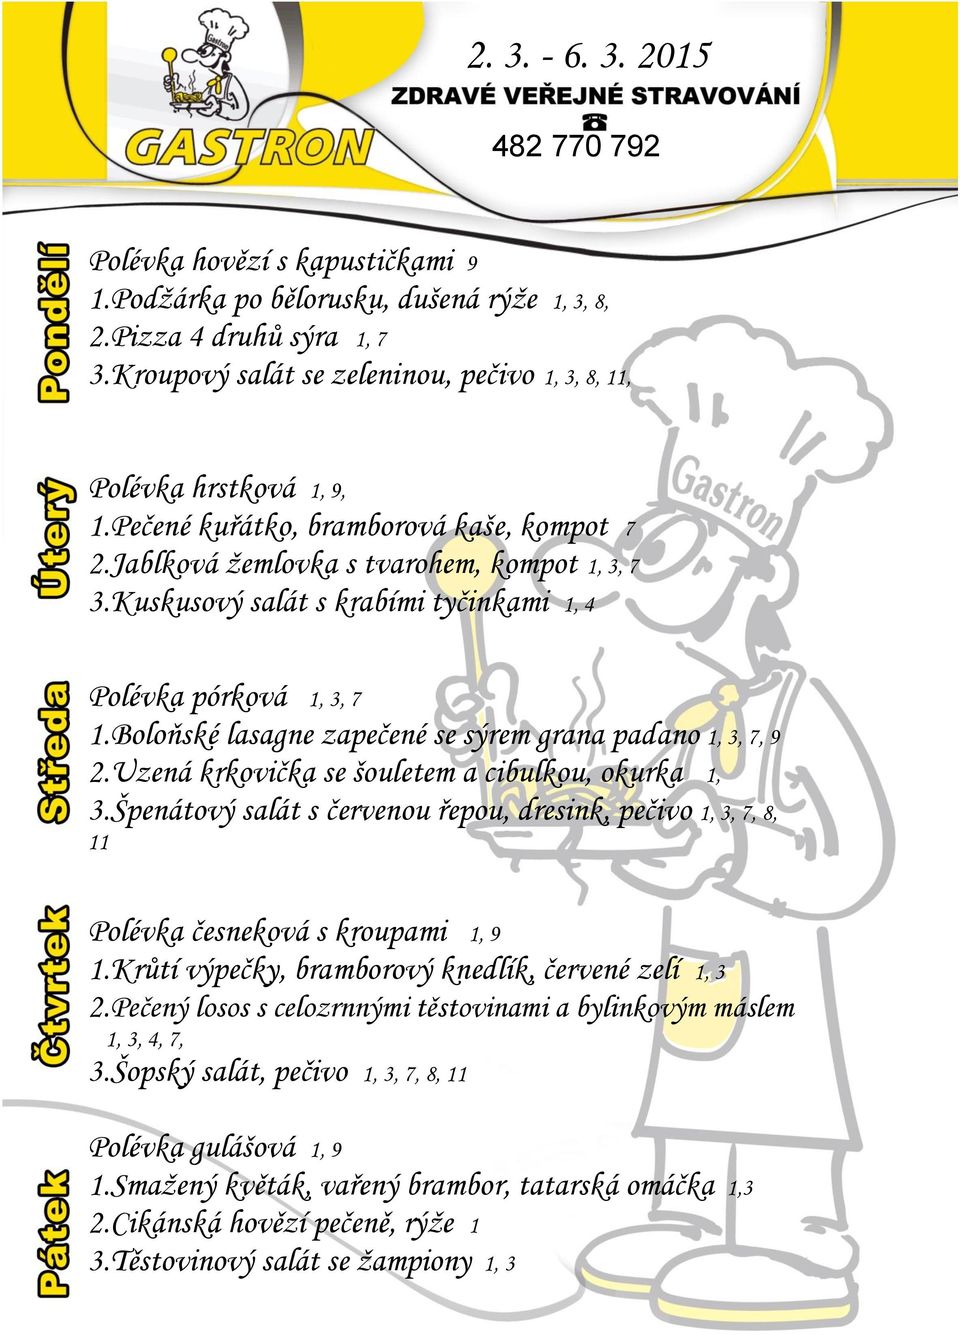 Boloňské lasagne zapečené se sýrem grana padano 1, 3, 7, 9 2.Uzená krkovička se šouletem a cibulkou, okurka 1, 3.